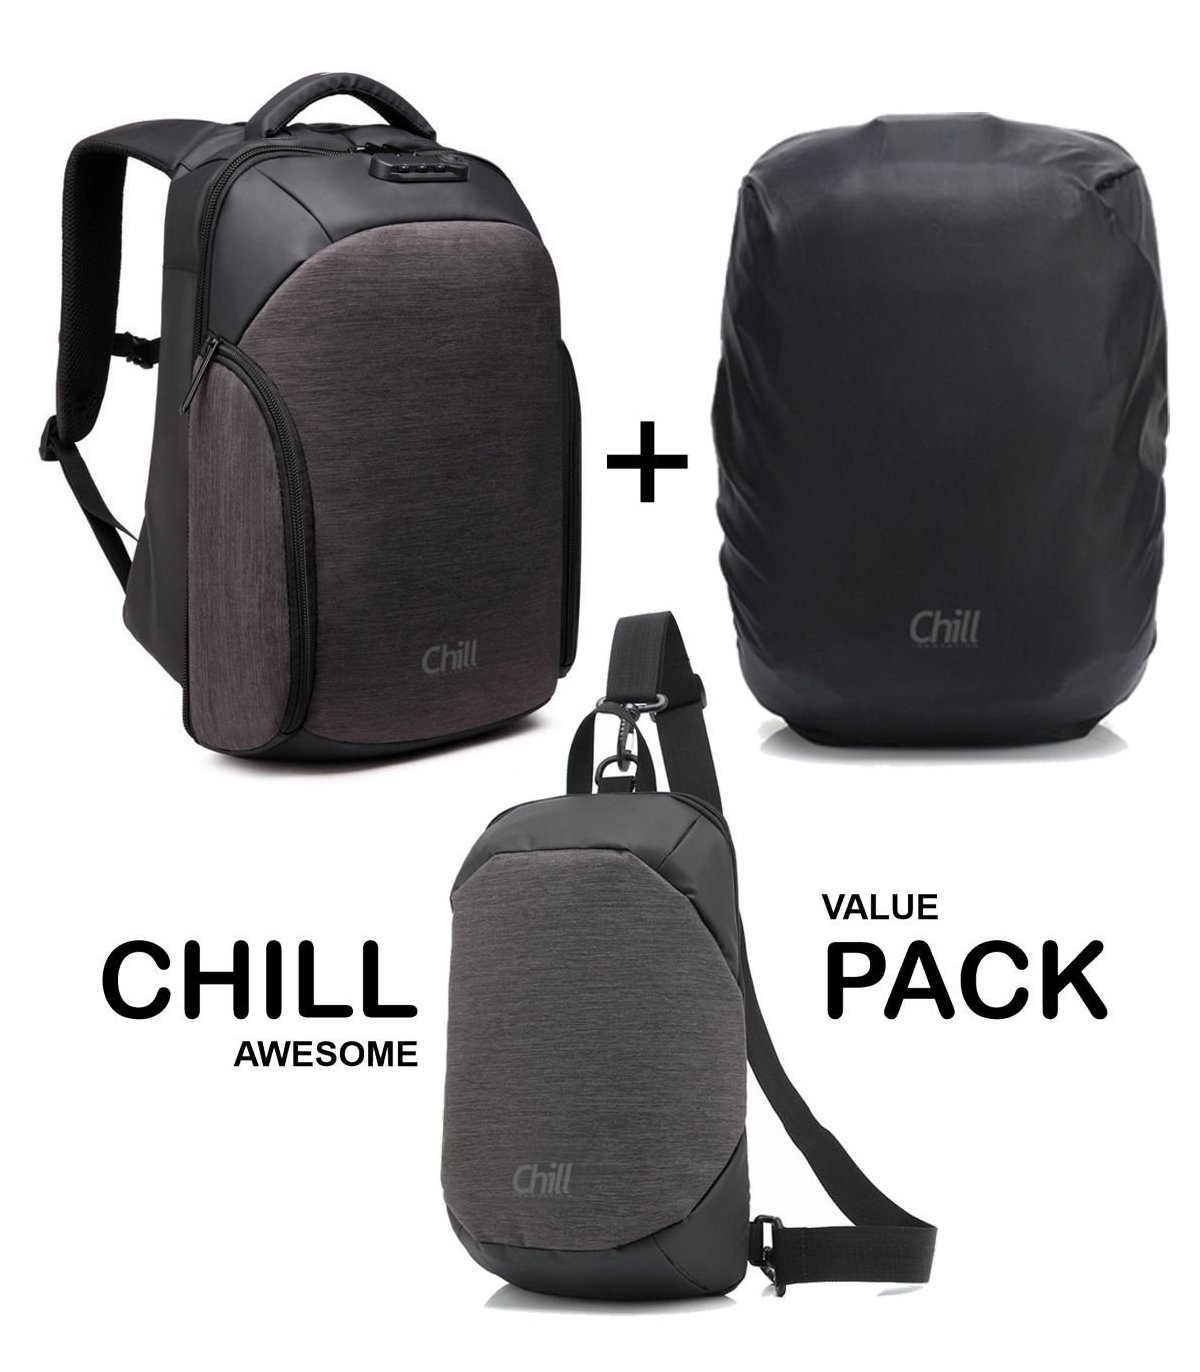 BUNDLE OFFER: Chill Stealth Backpack + 